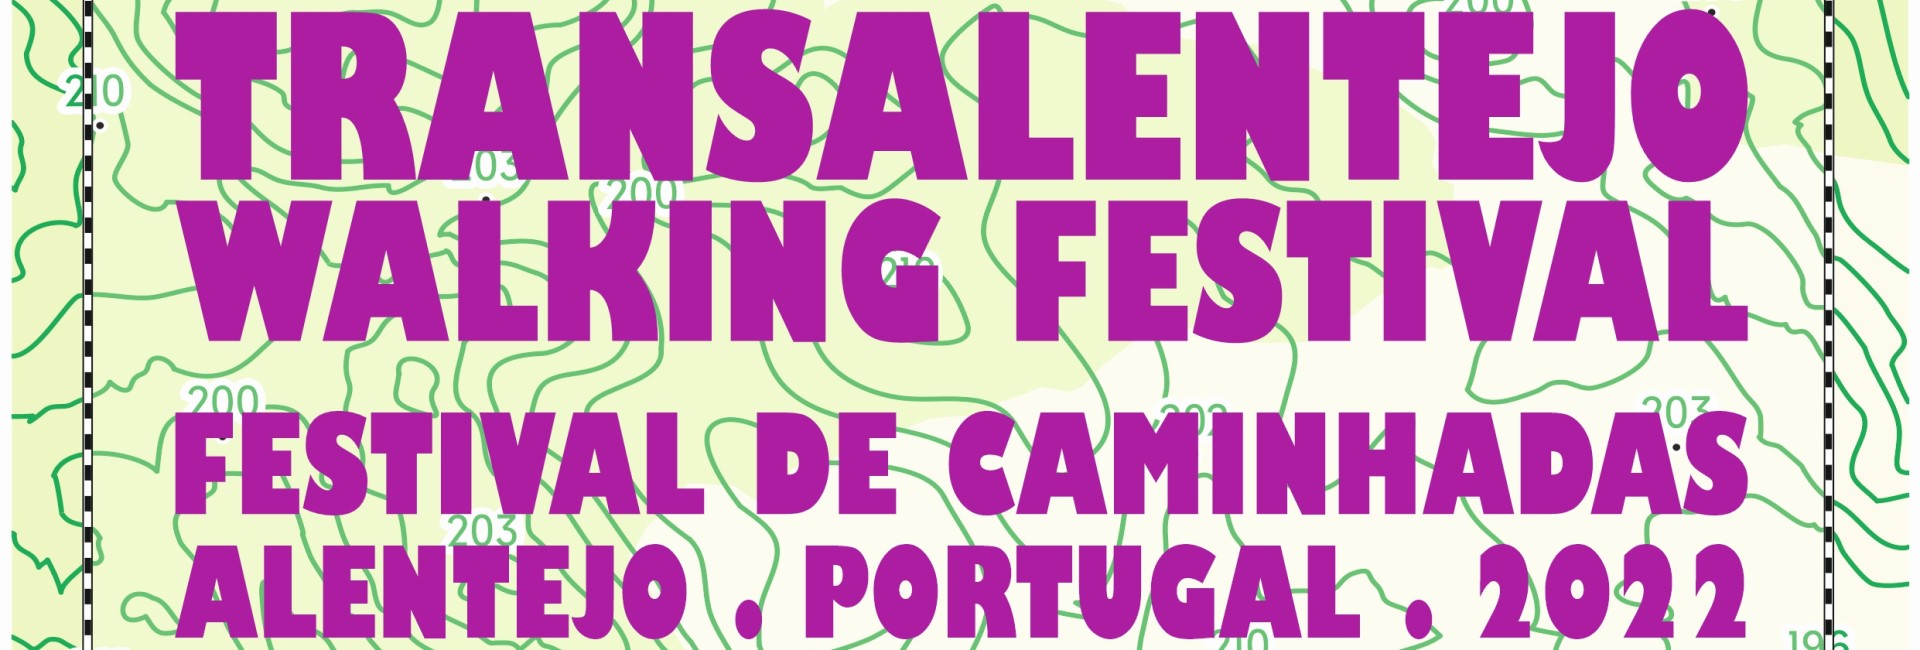 (Português) Transalentejo Walking Festival – “Conquista de Terena”